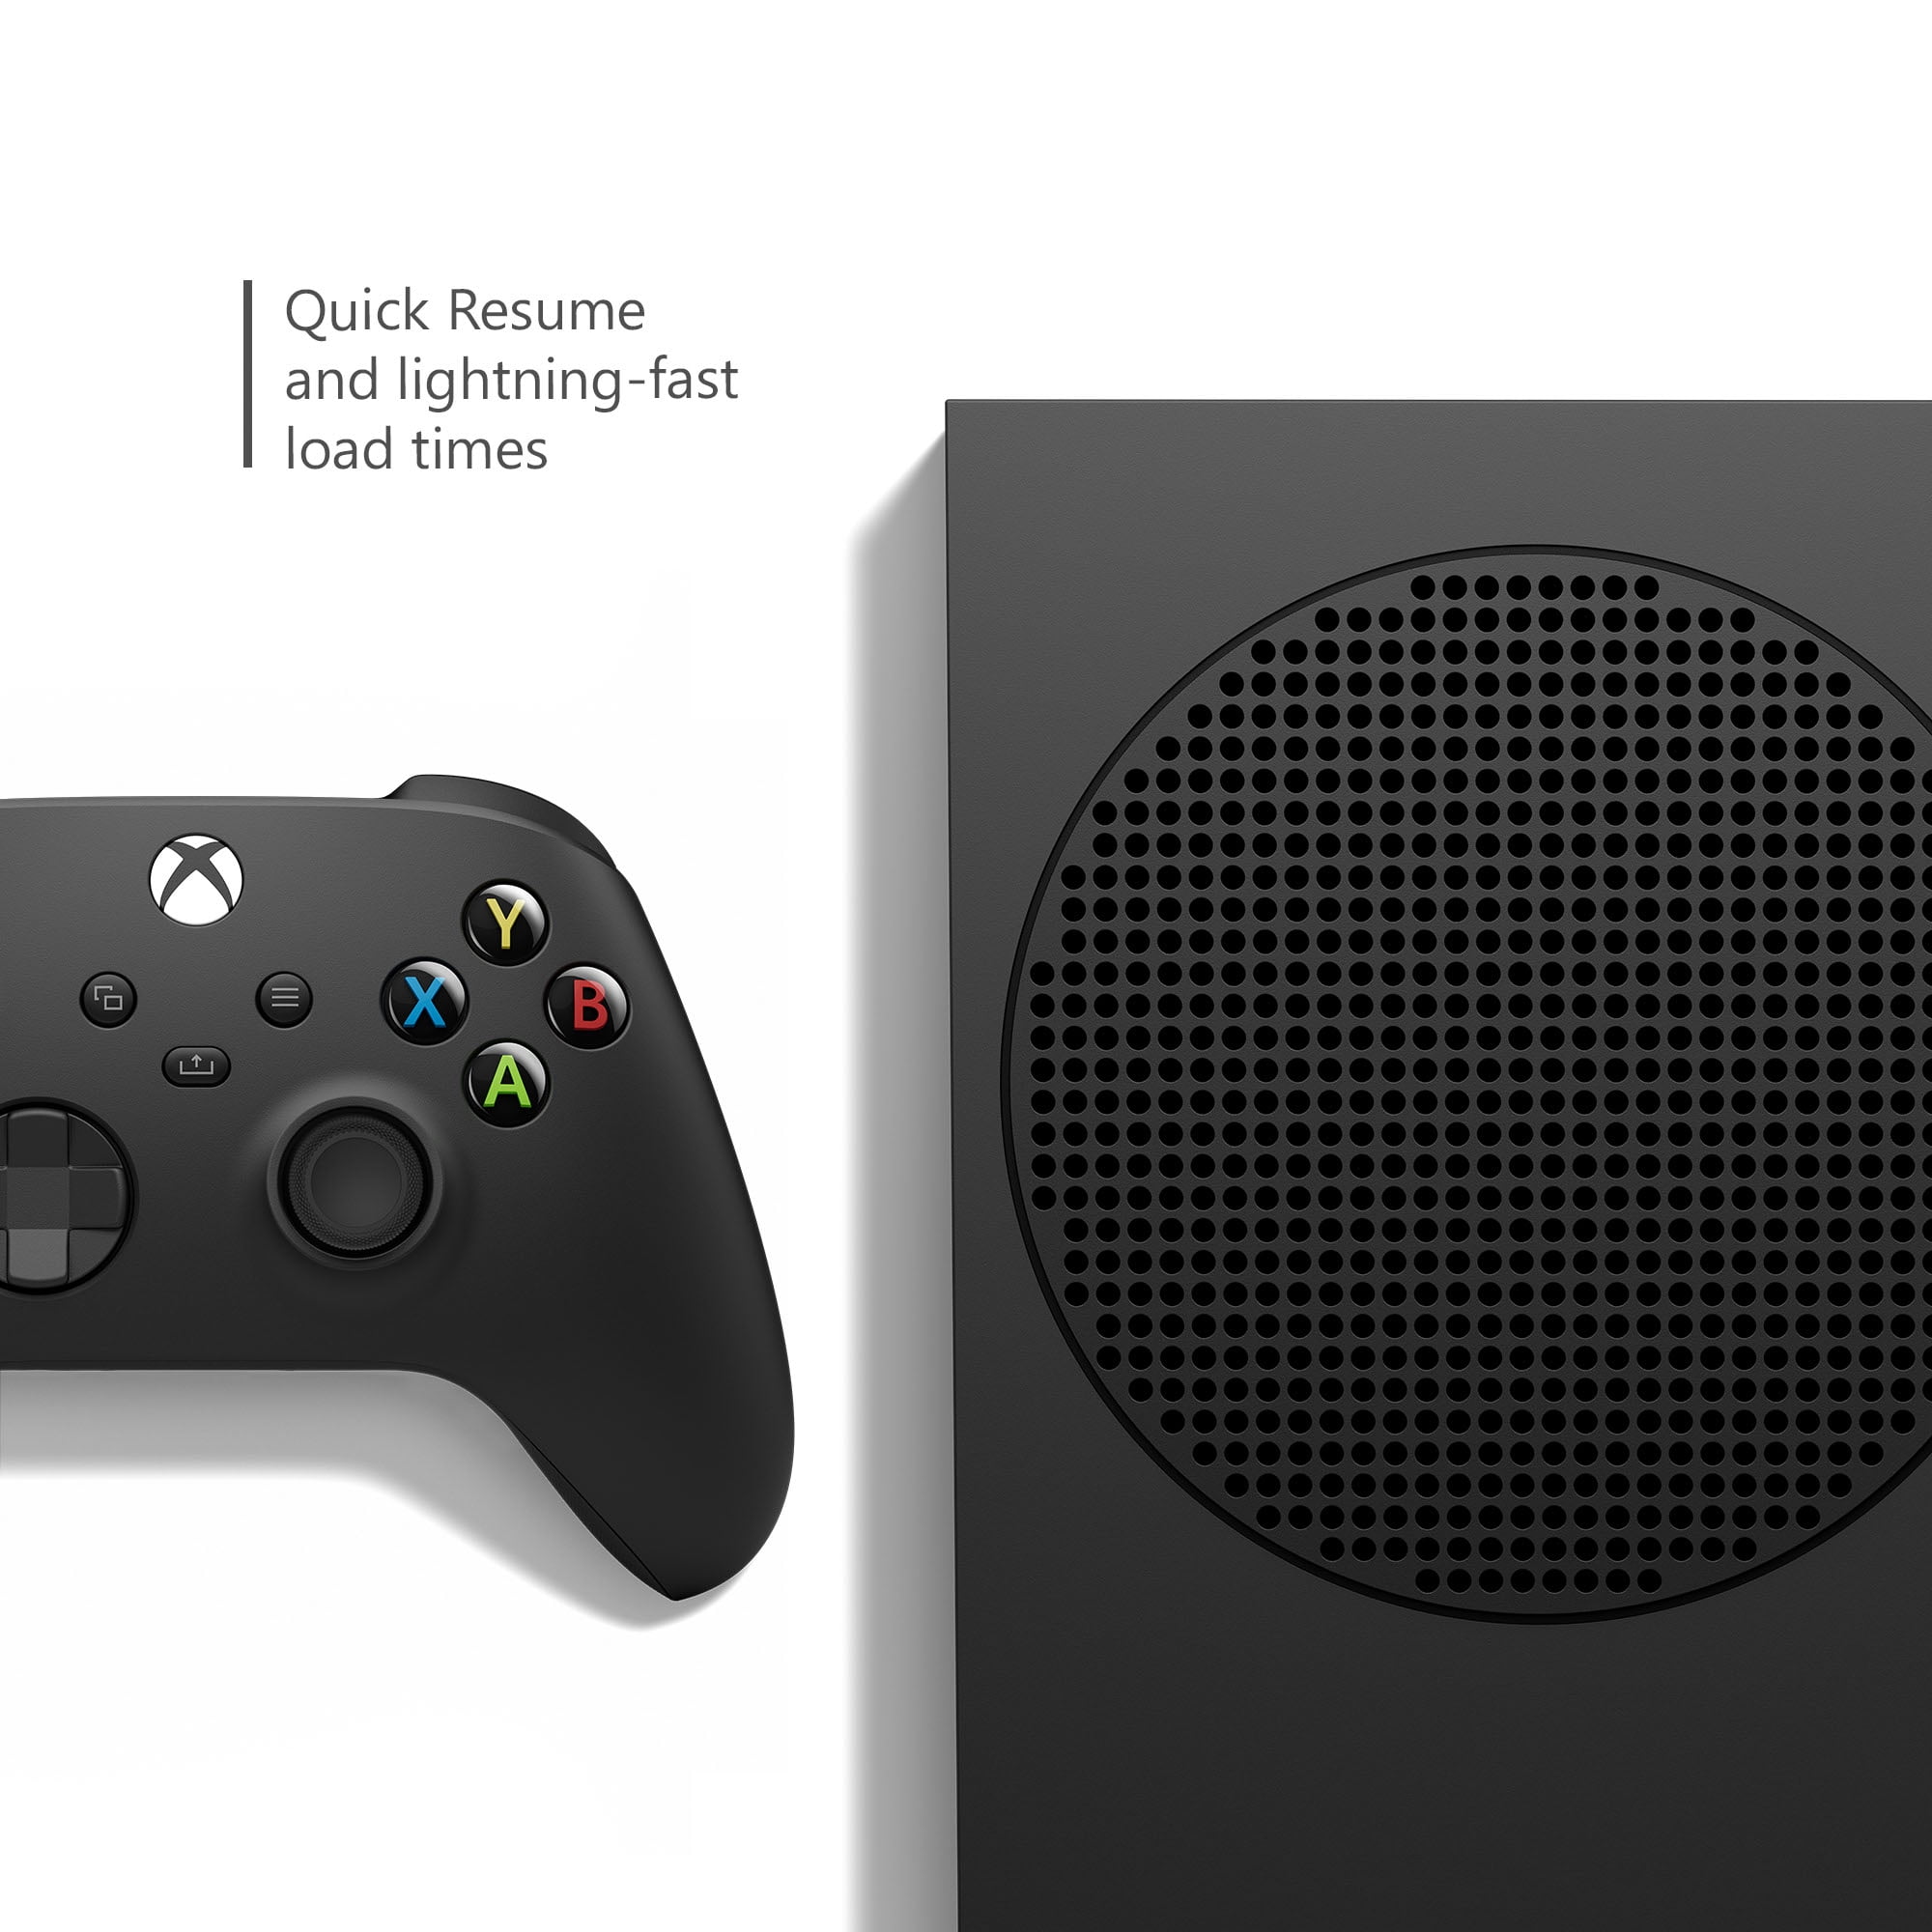 Microsoft Xbox One S 1TB Console w/ Brand New Series S/X